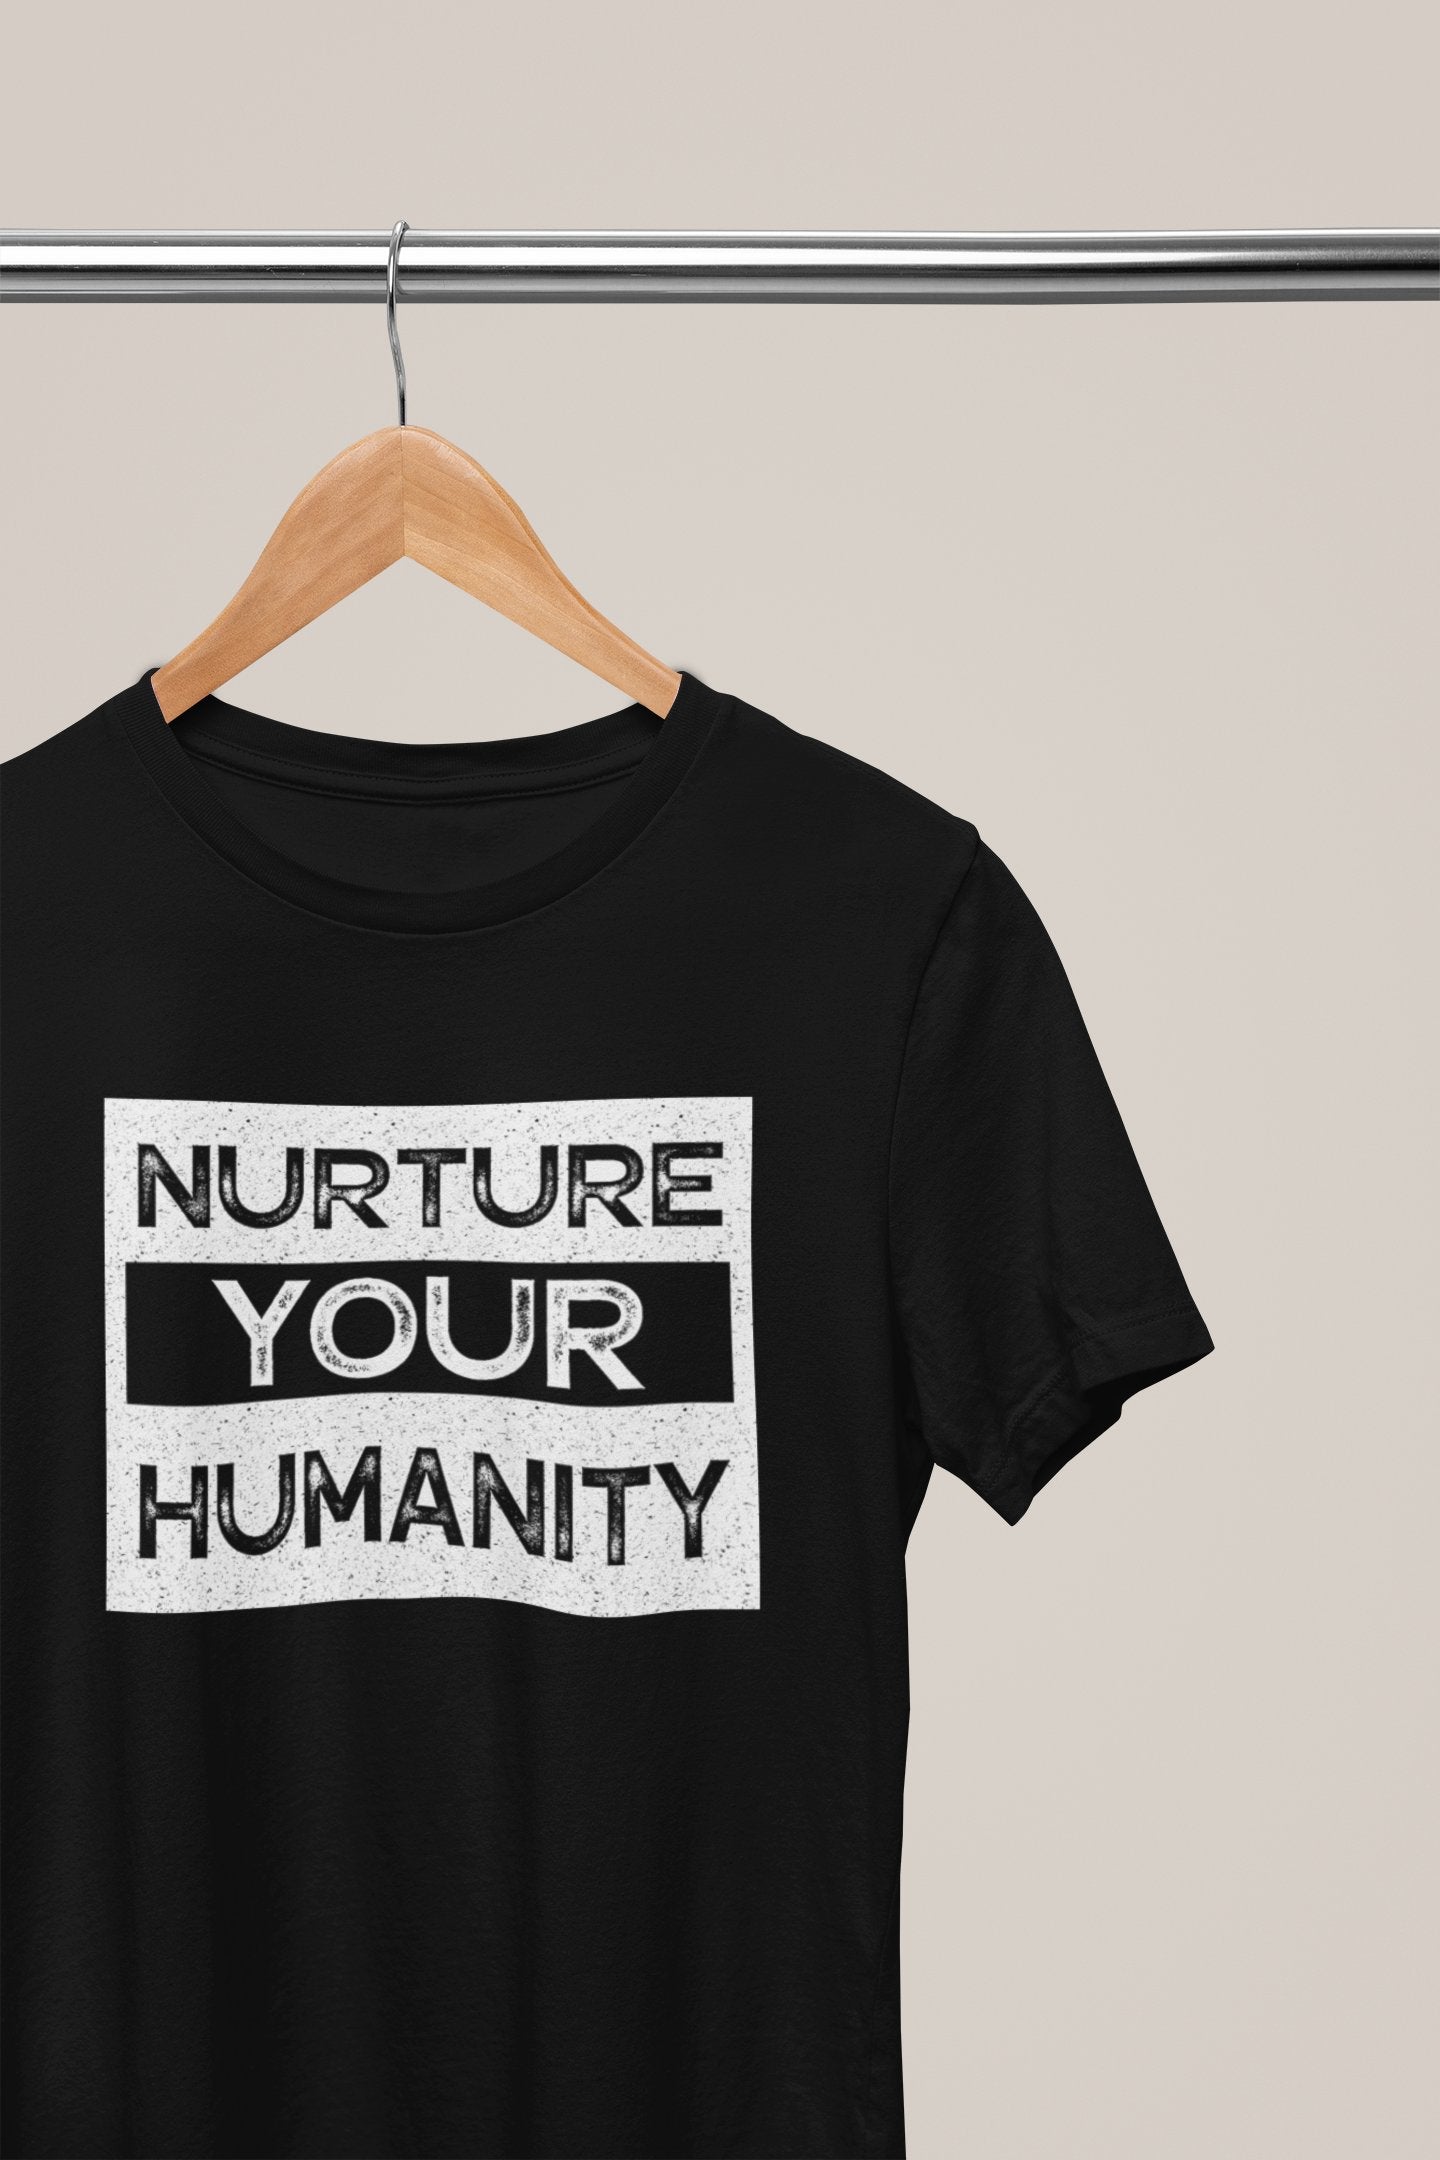 Nurture Your Humanity, Hoodies, Sweatshirts, Tees, and Mugs